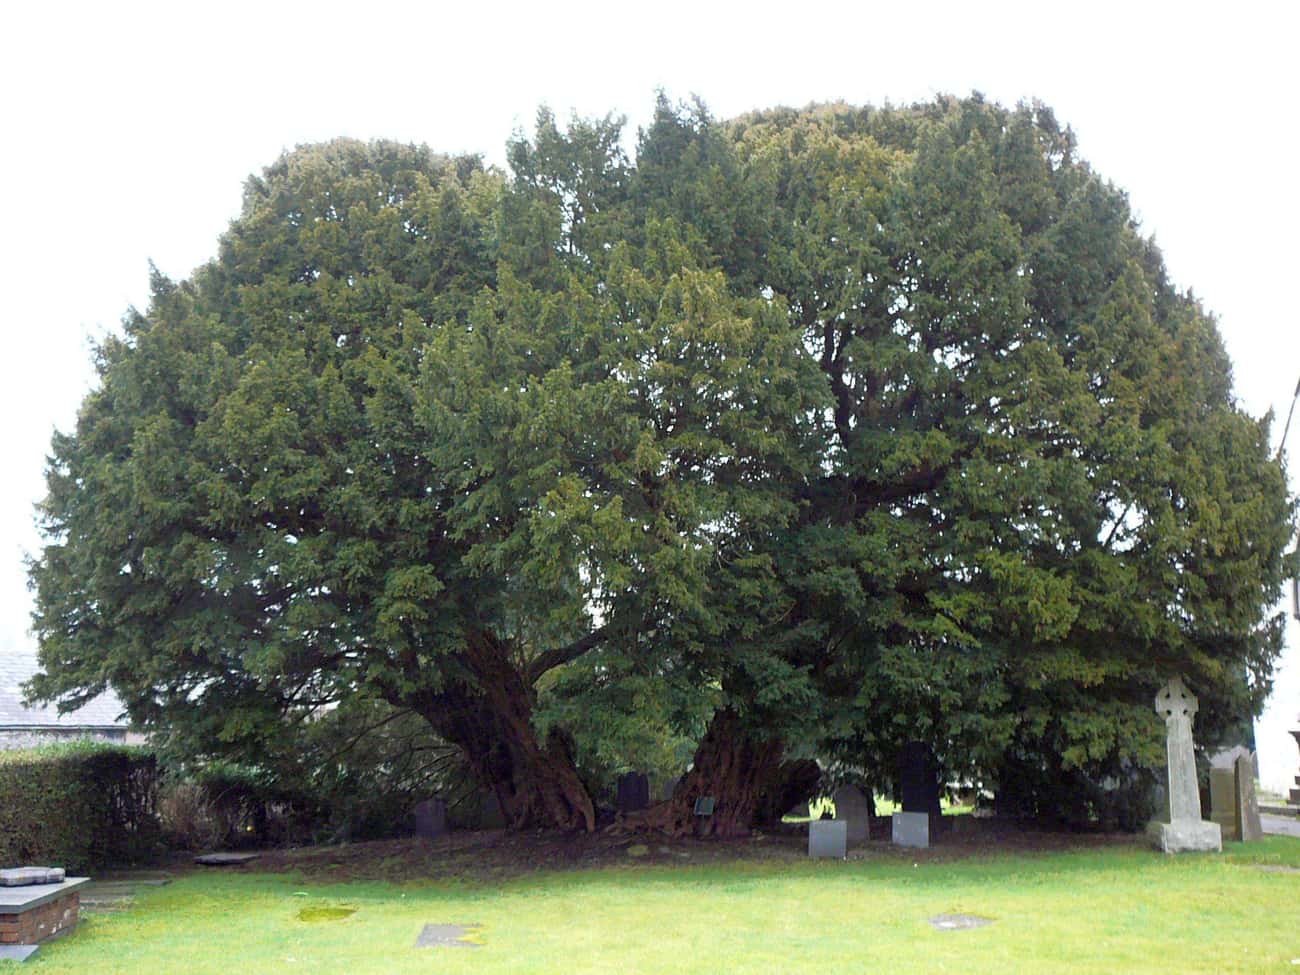 Llangernyw Yew, A 4-5,000-Year-Old Common Yew